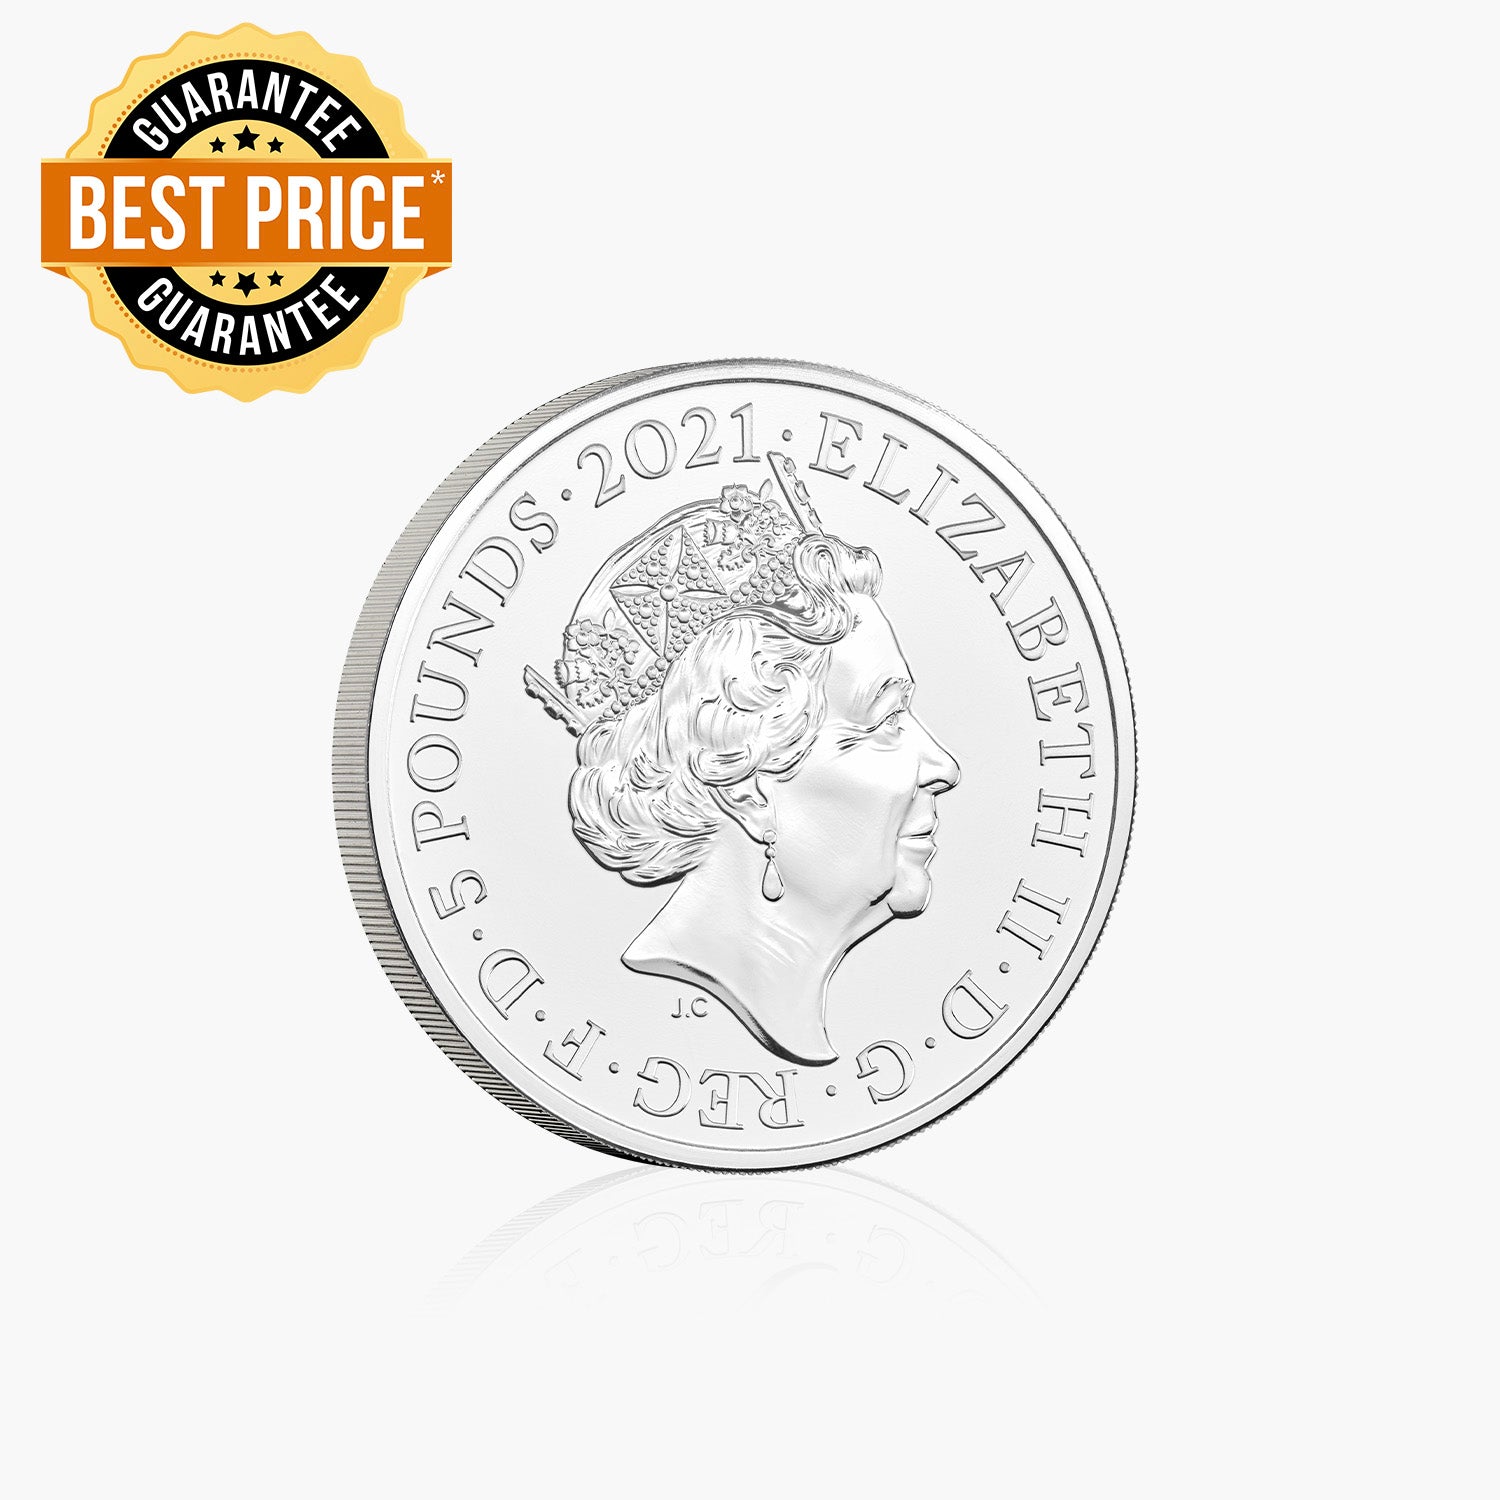 Gandhi £5 Brilliant Uncirculated Coin